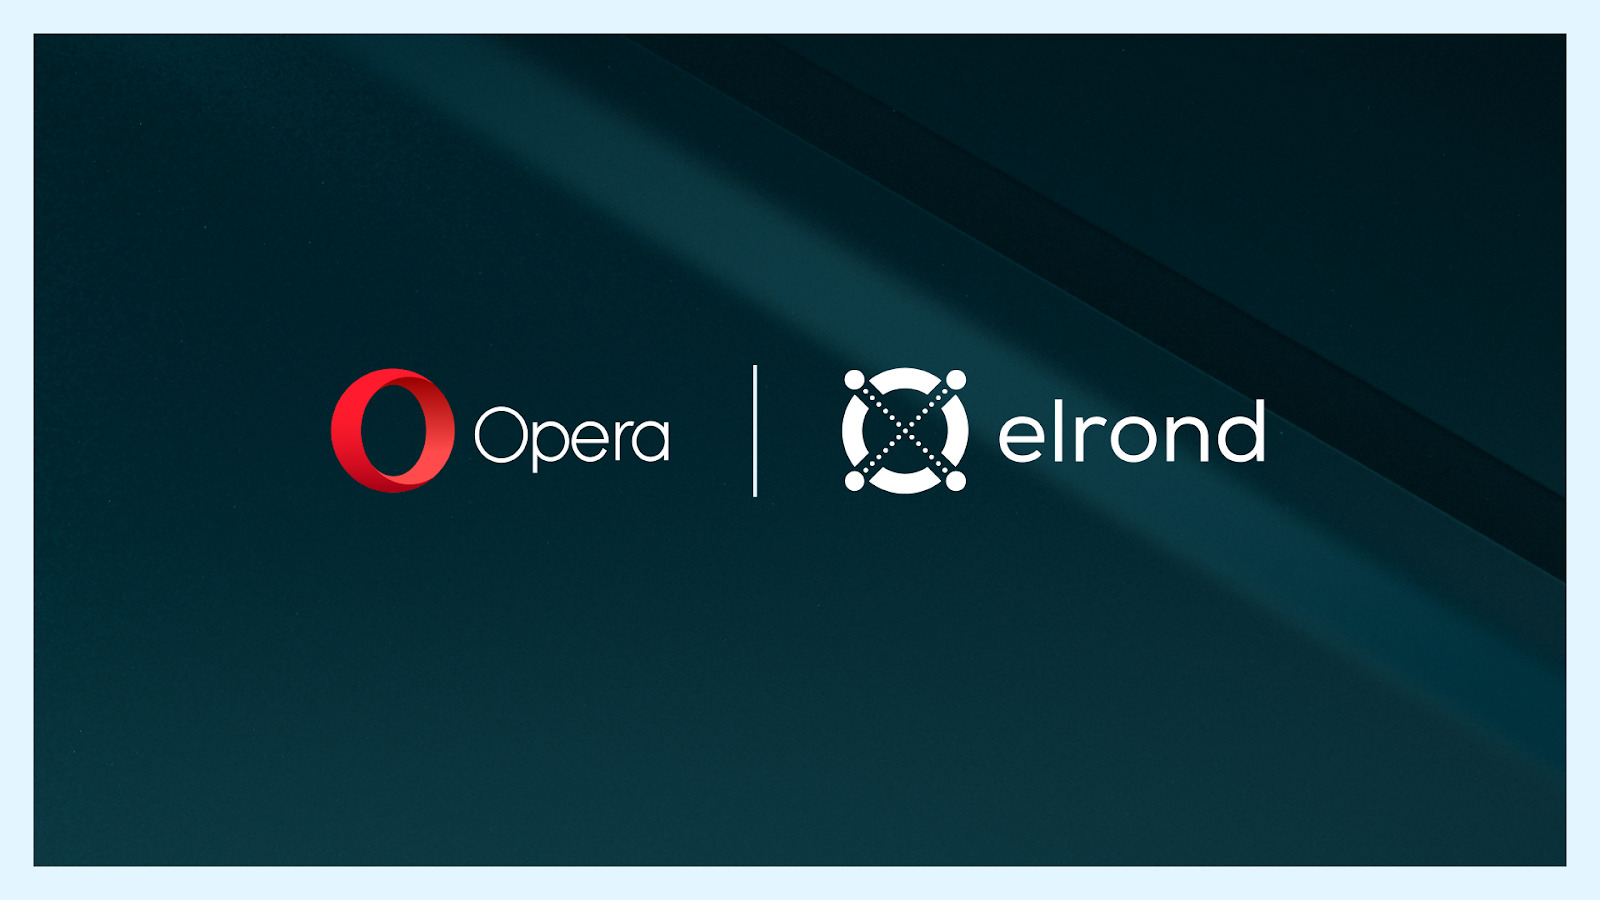 Opera and Elrond logos